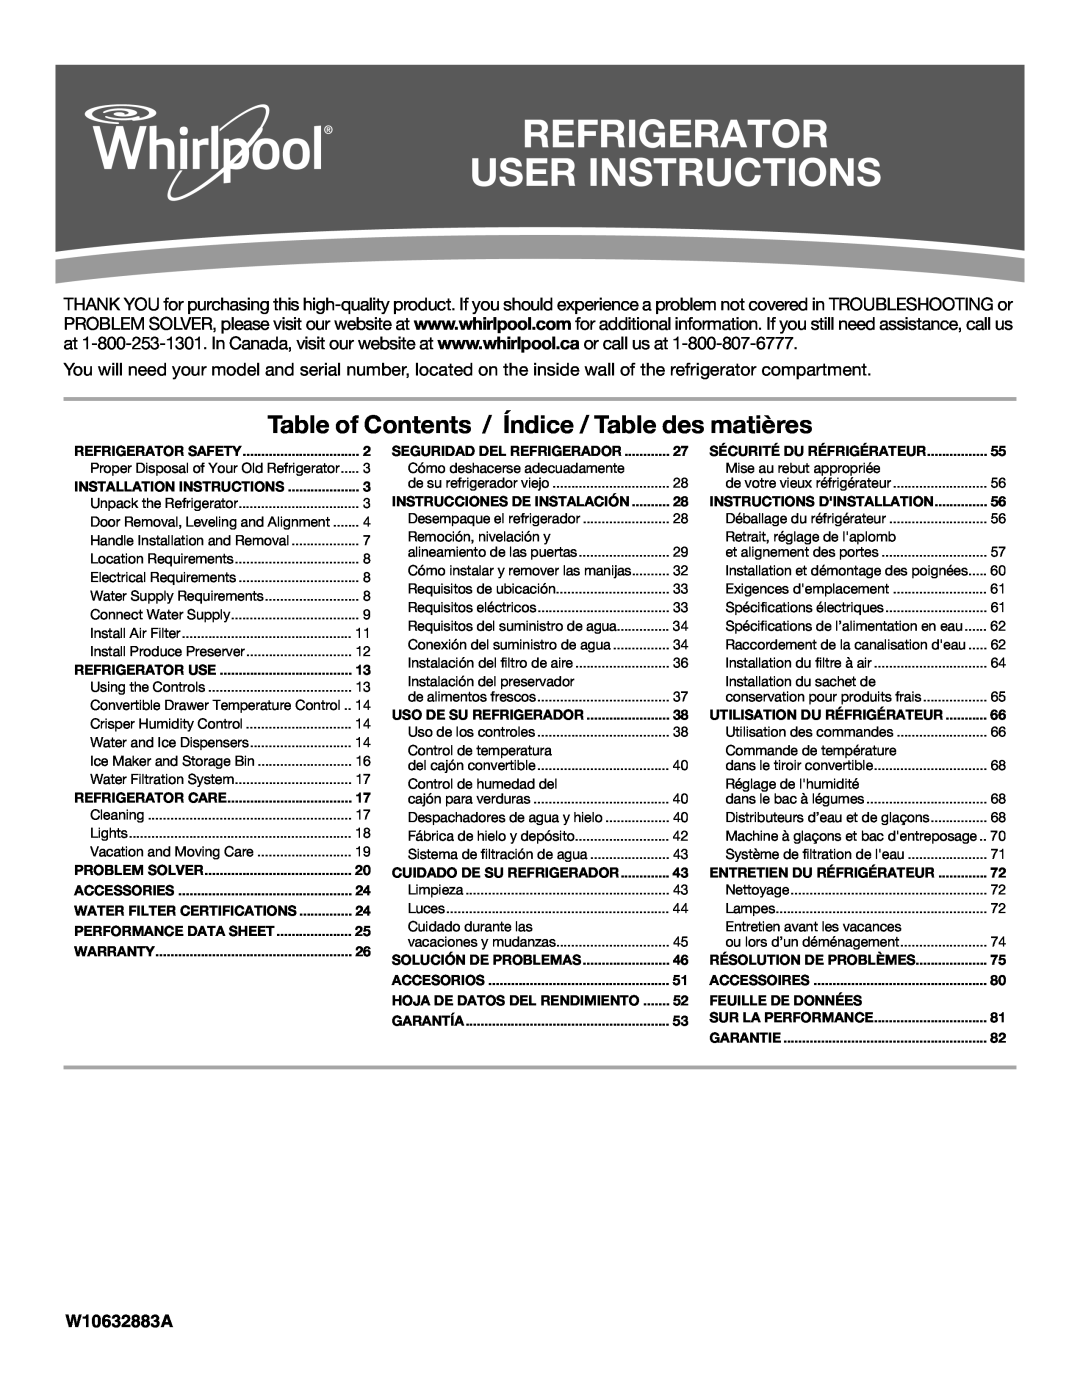 Whirlpool W10632883A installation instructions Refrigerator User Instructions 